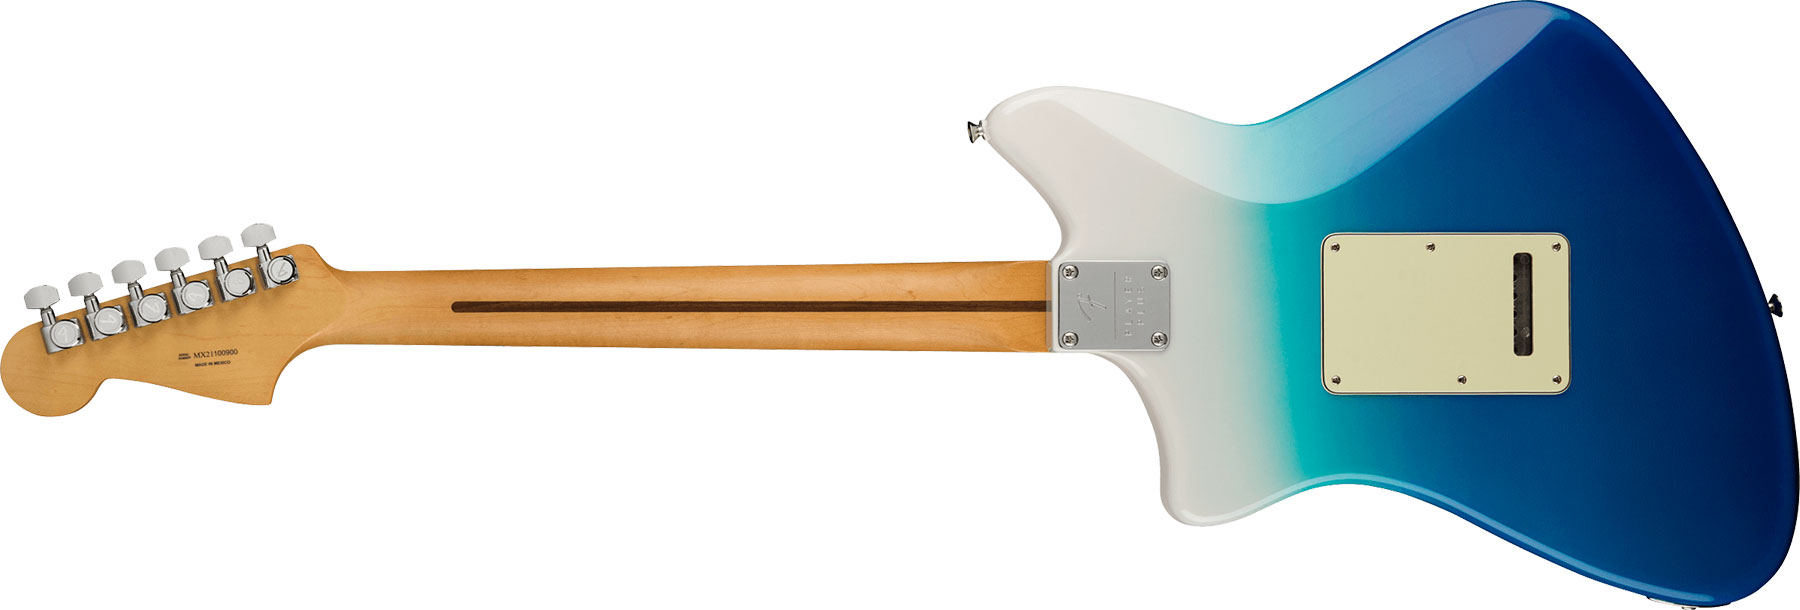 Fender Meteora Player Plus Hh Mex 2h Ht Pf - Belair Blue - Guitarra electrica retro rock - Variation 1